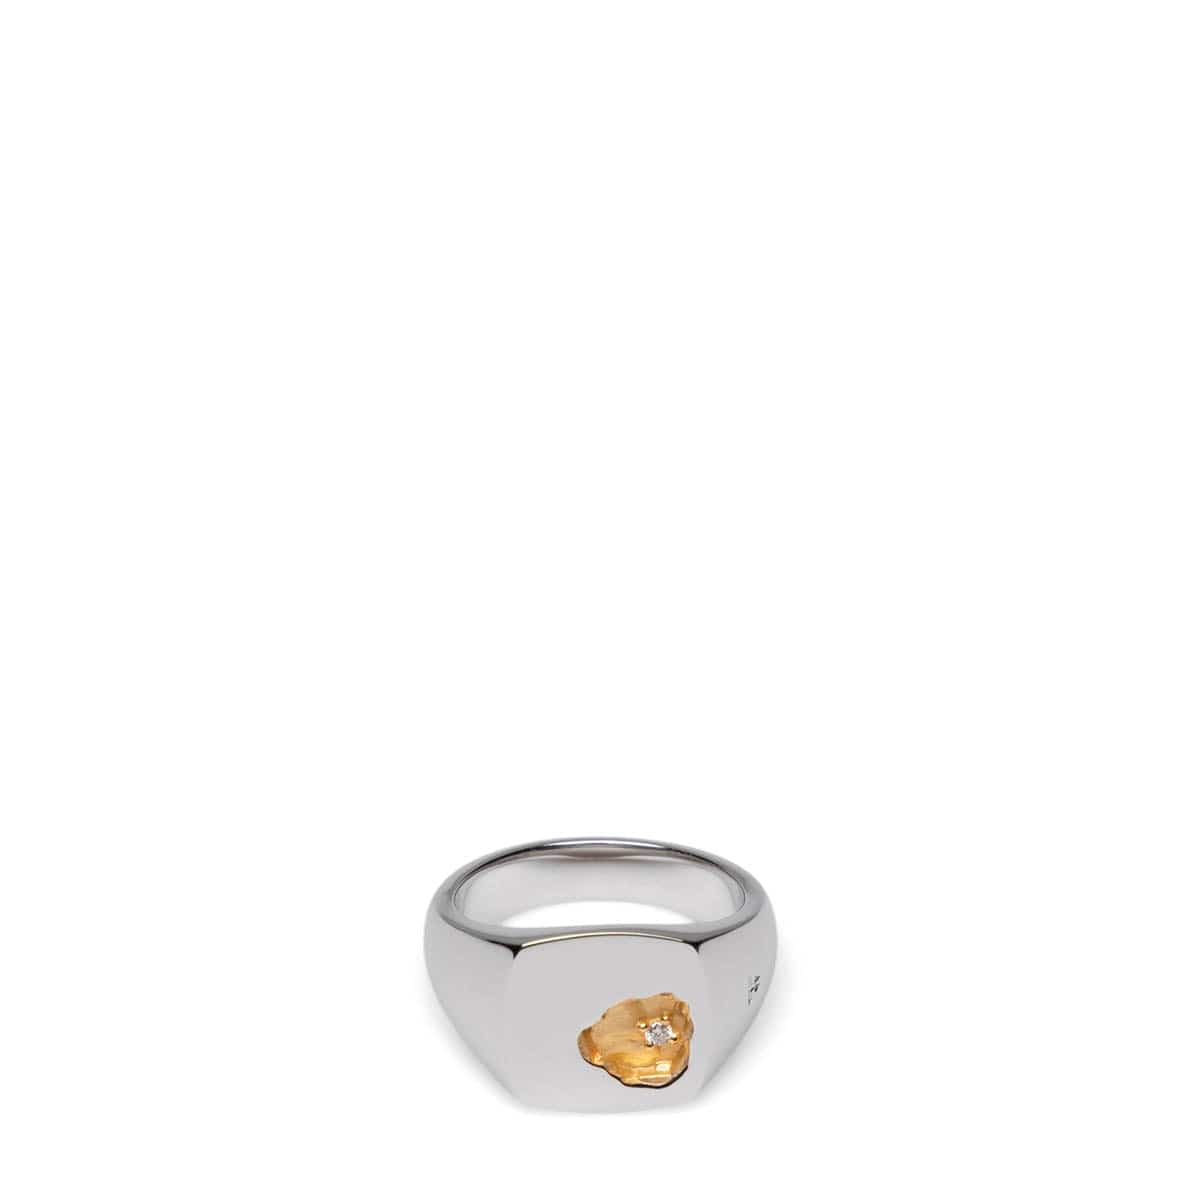 Authentic Louis Vuitton Nanogram Ring size SMall